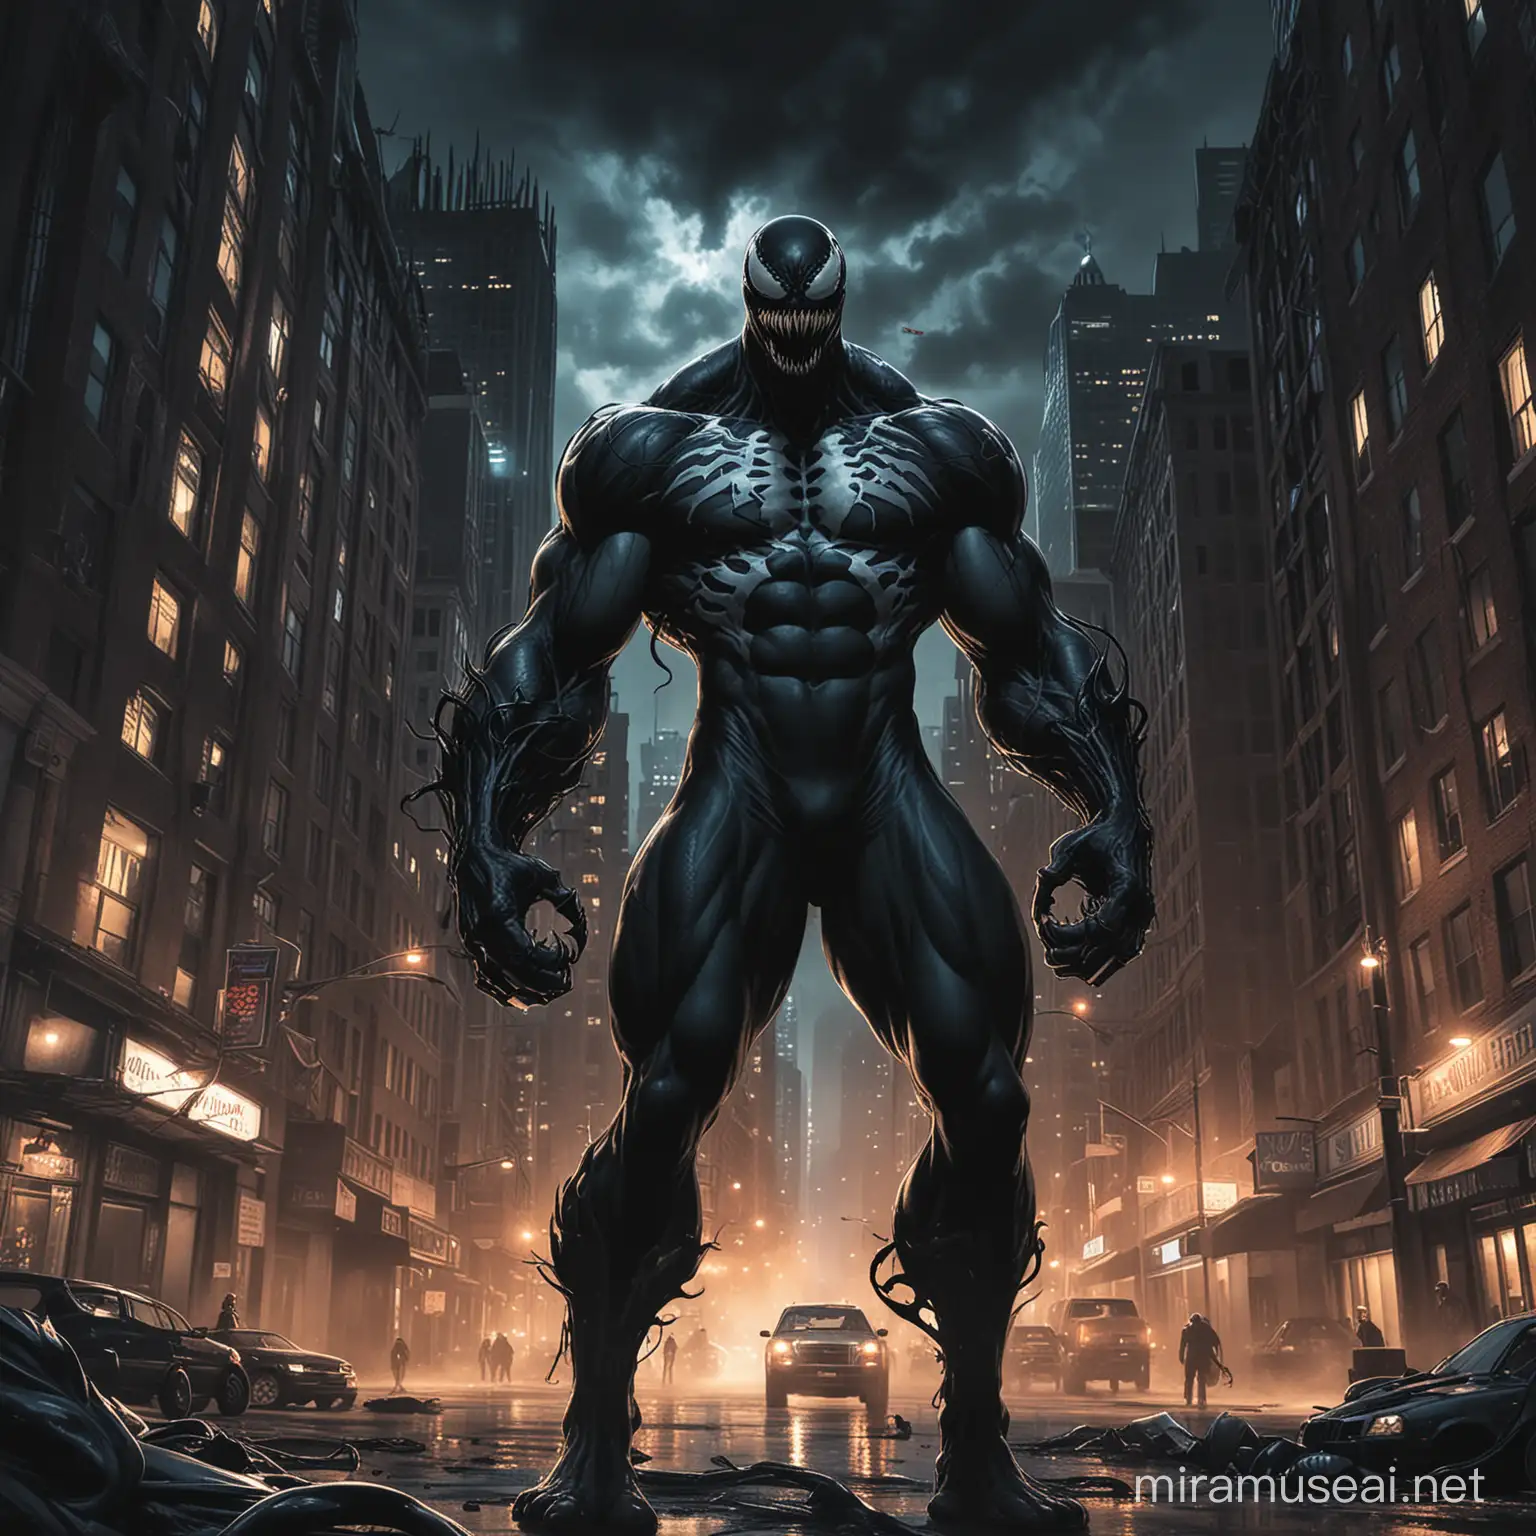 Five Copies of Venom in a Dark Downtown City Scene